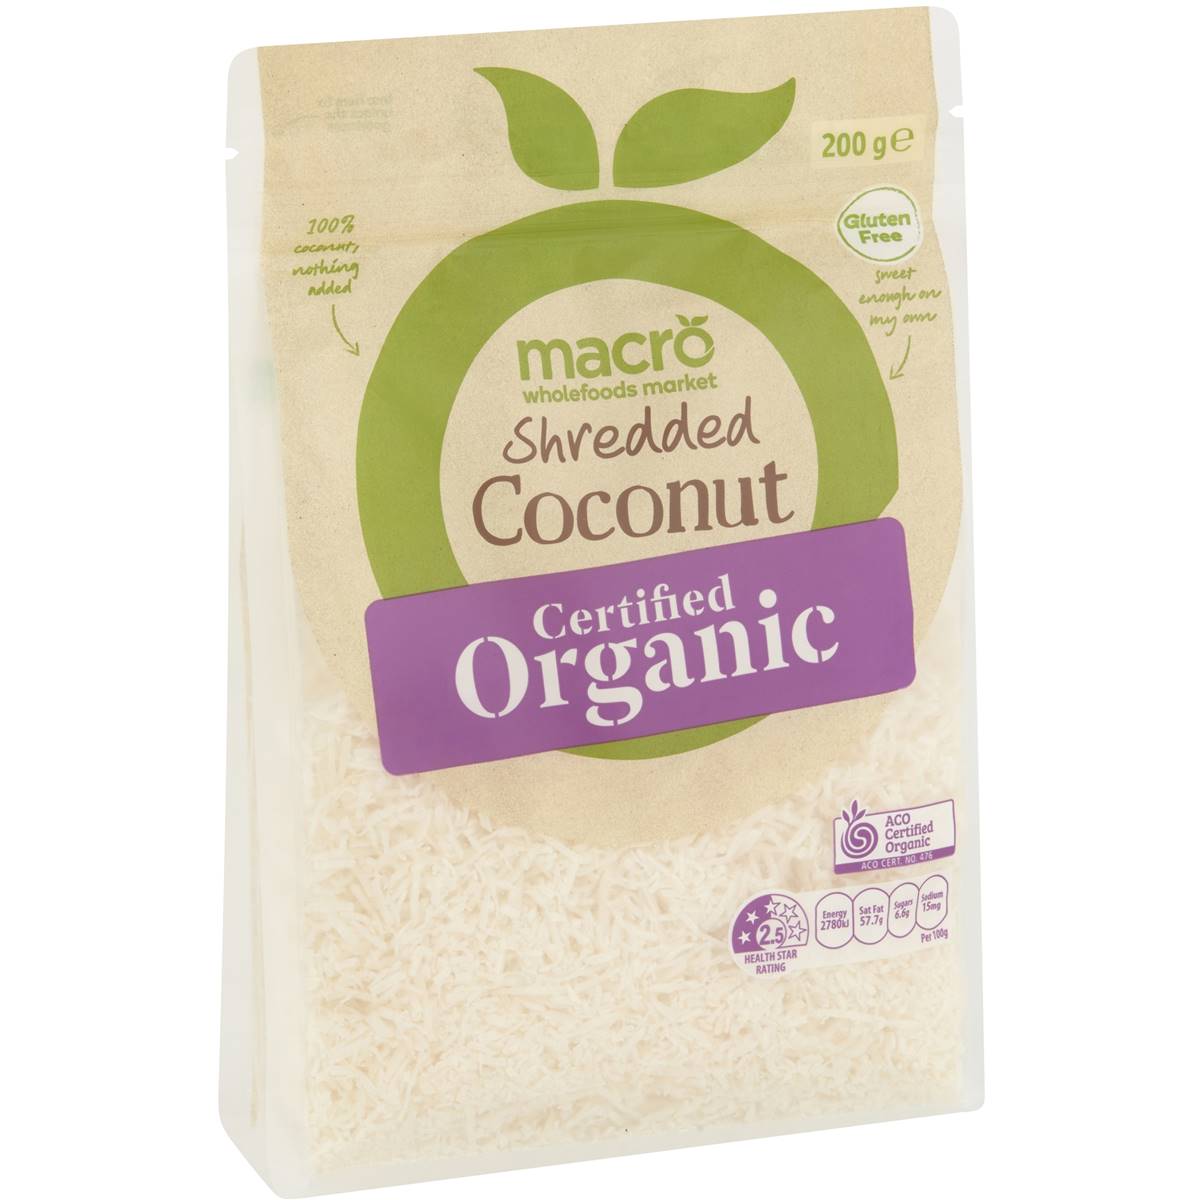 Calories in Macro Organic Shredded Coconut